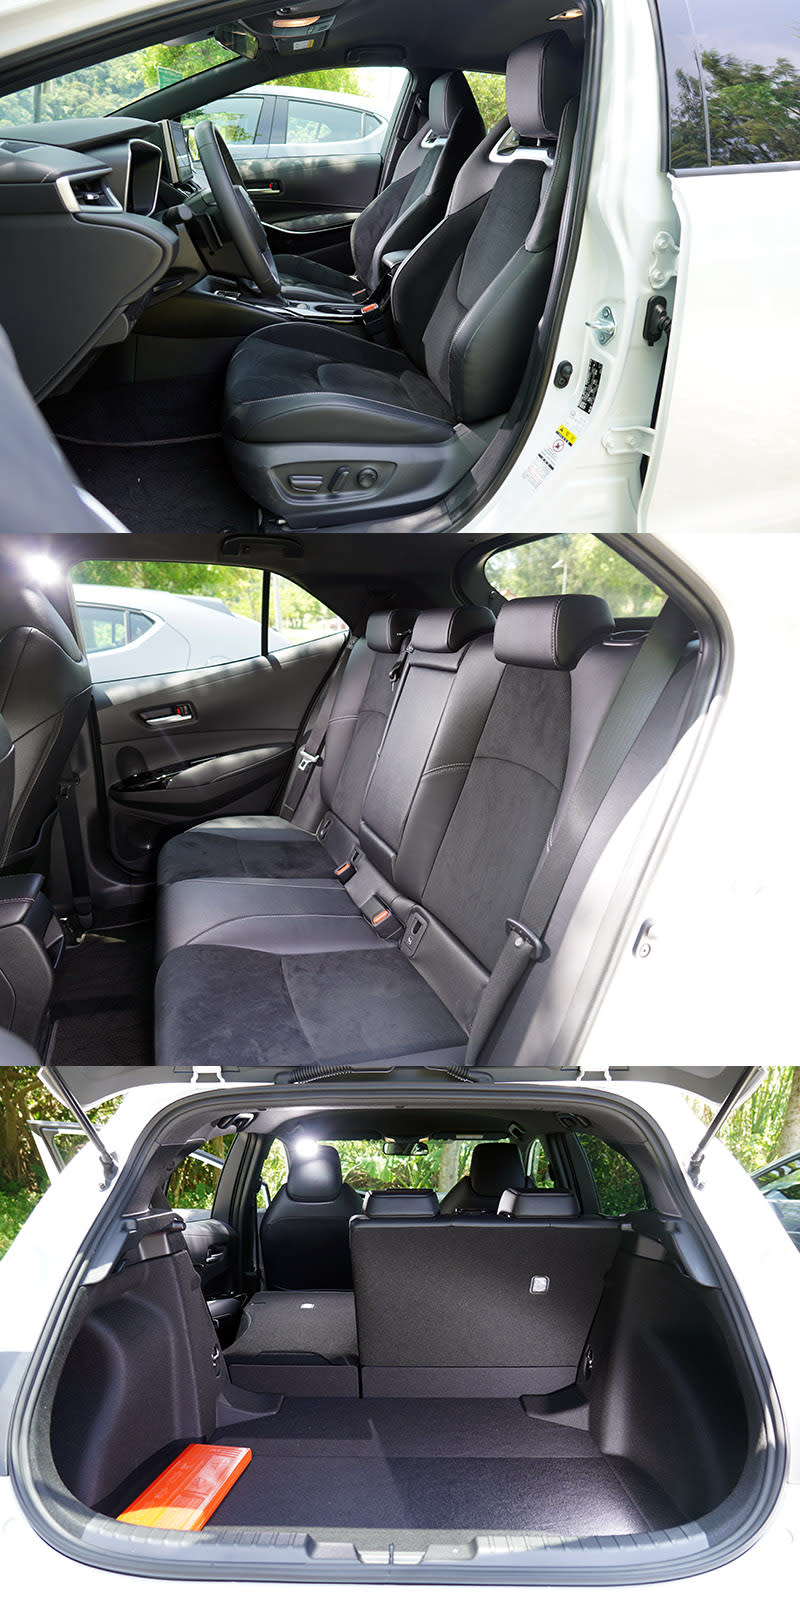 Corolla Sport在空間表現上受到尺碼略小與軸距較短的先天限制，整體遜於另兩款車。不過前座則新增了駕駛座電動8向調整附電動腰靠，同時維持唯一的雙前座電動加熱功能。